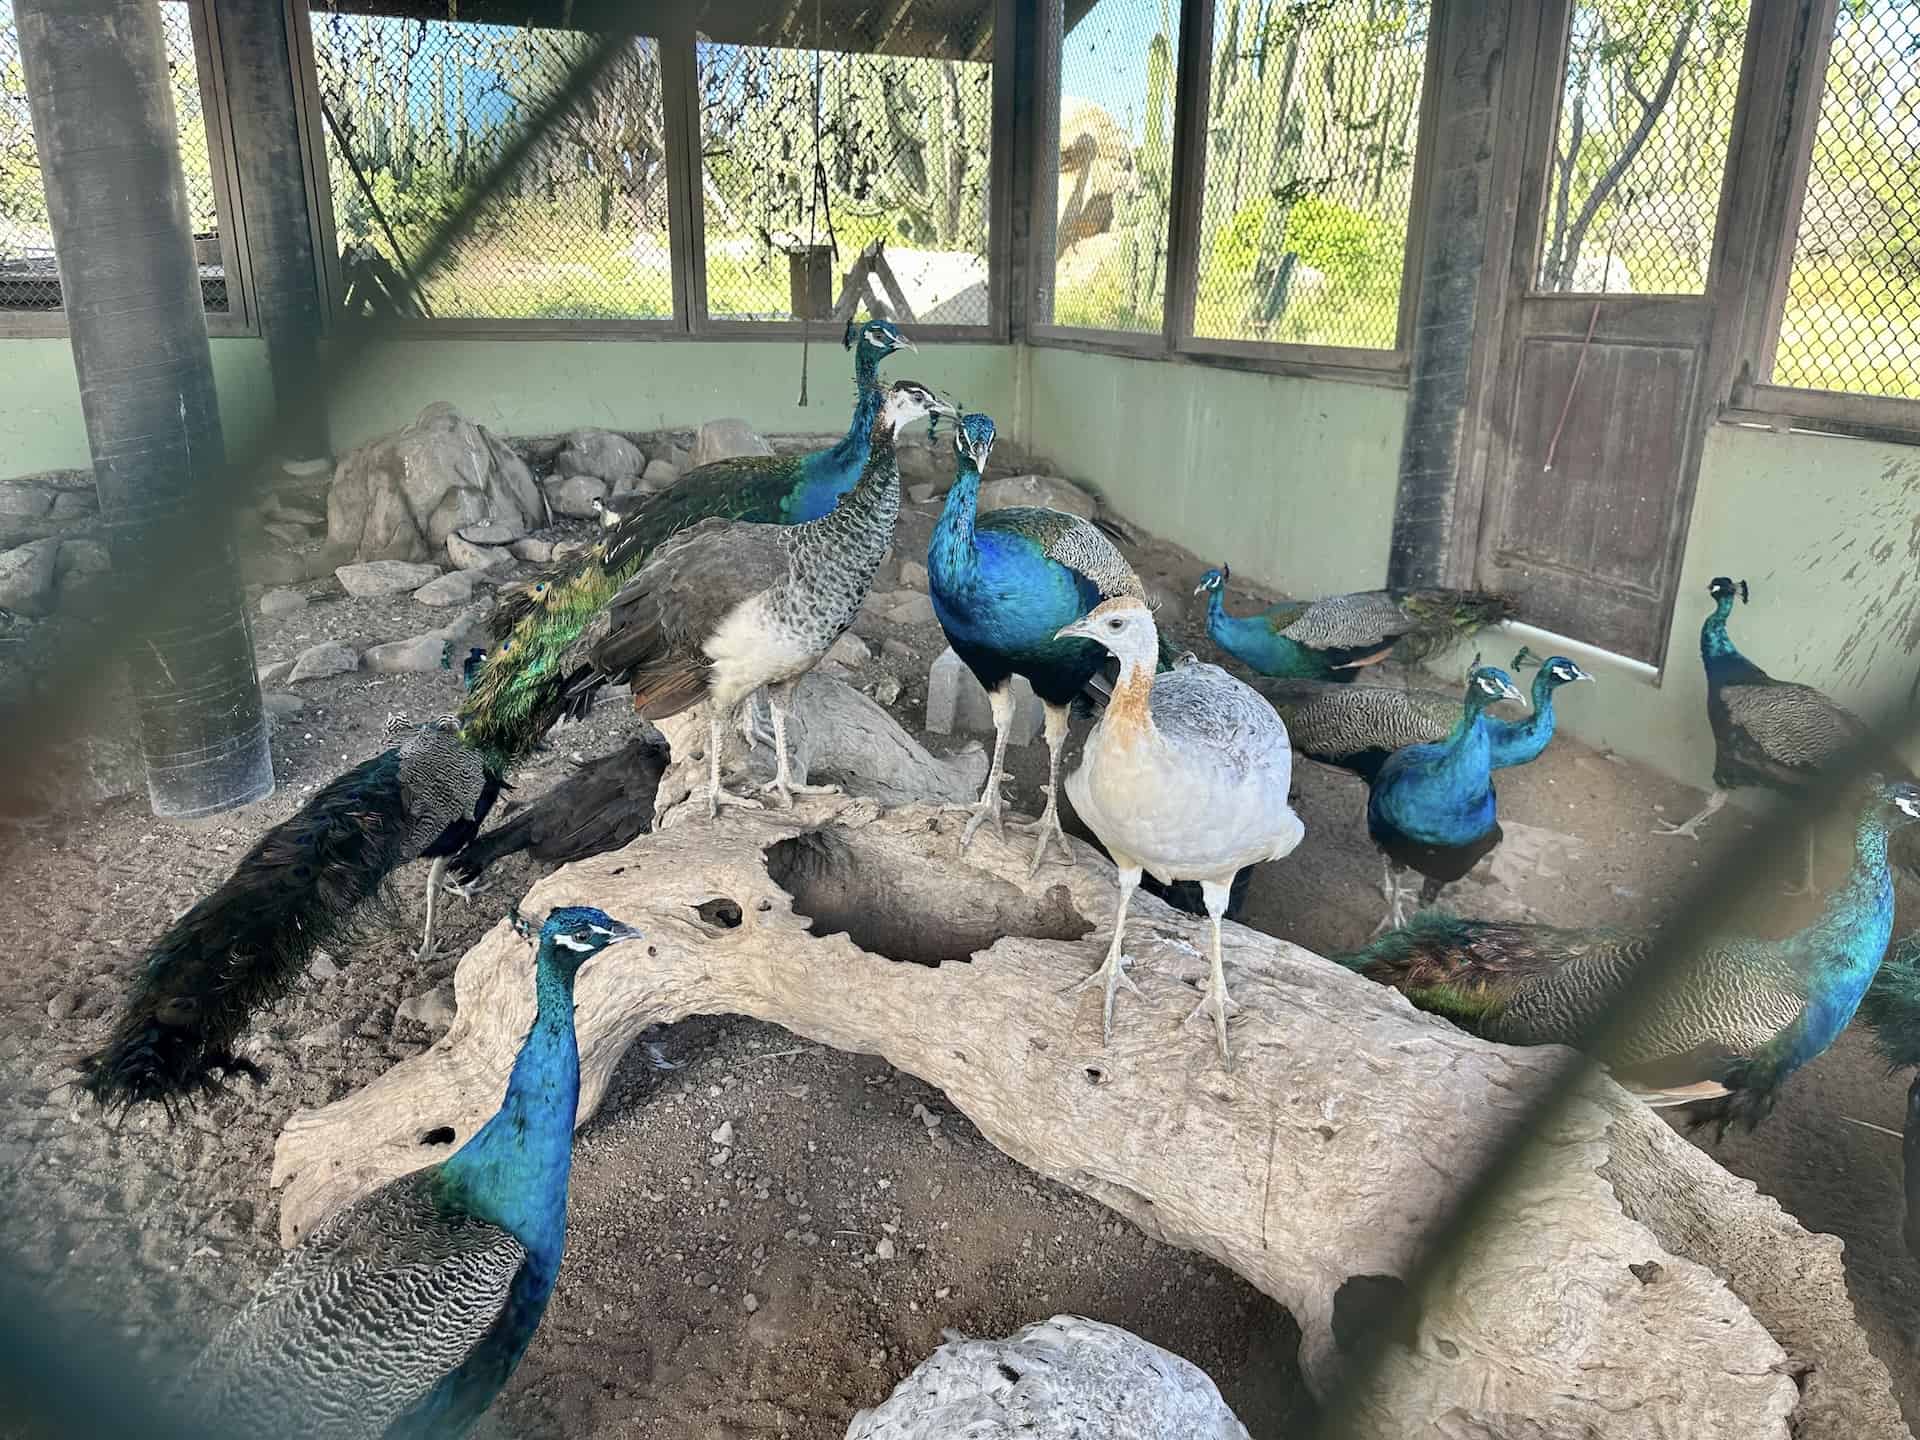 Peacocks at Philip's Animal Garden